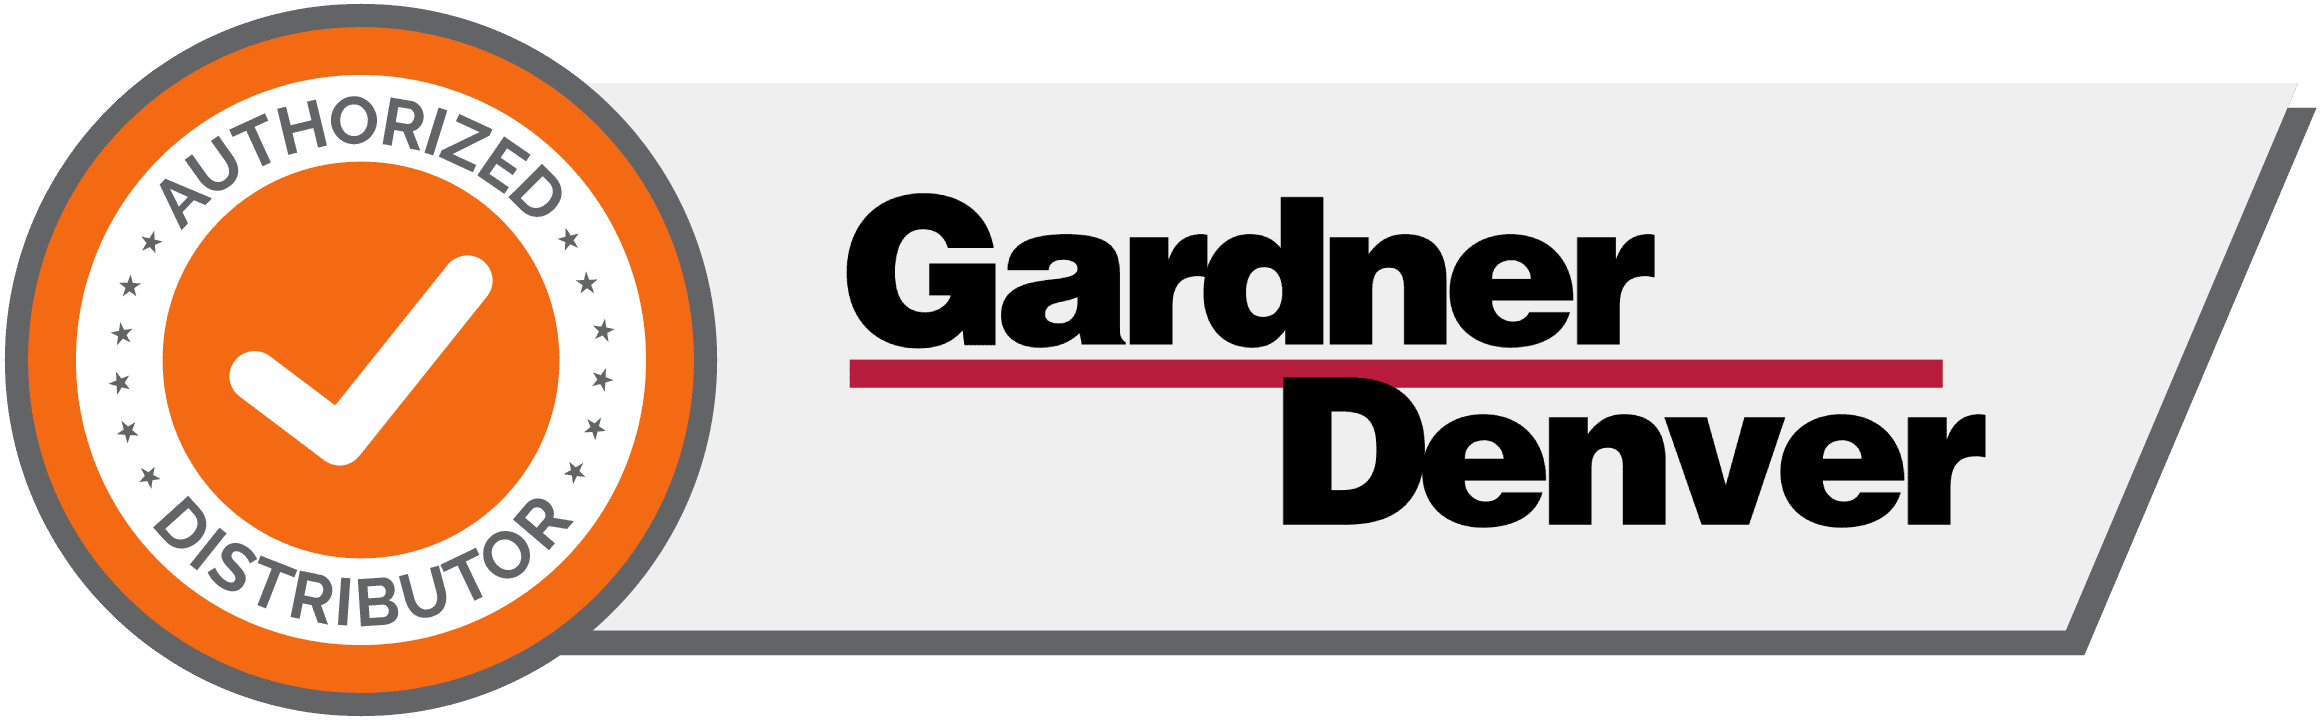 Authorized Distributor of Gardner Denver Logo